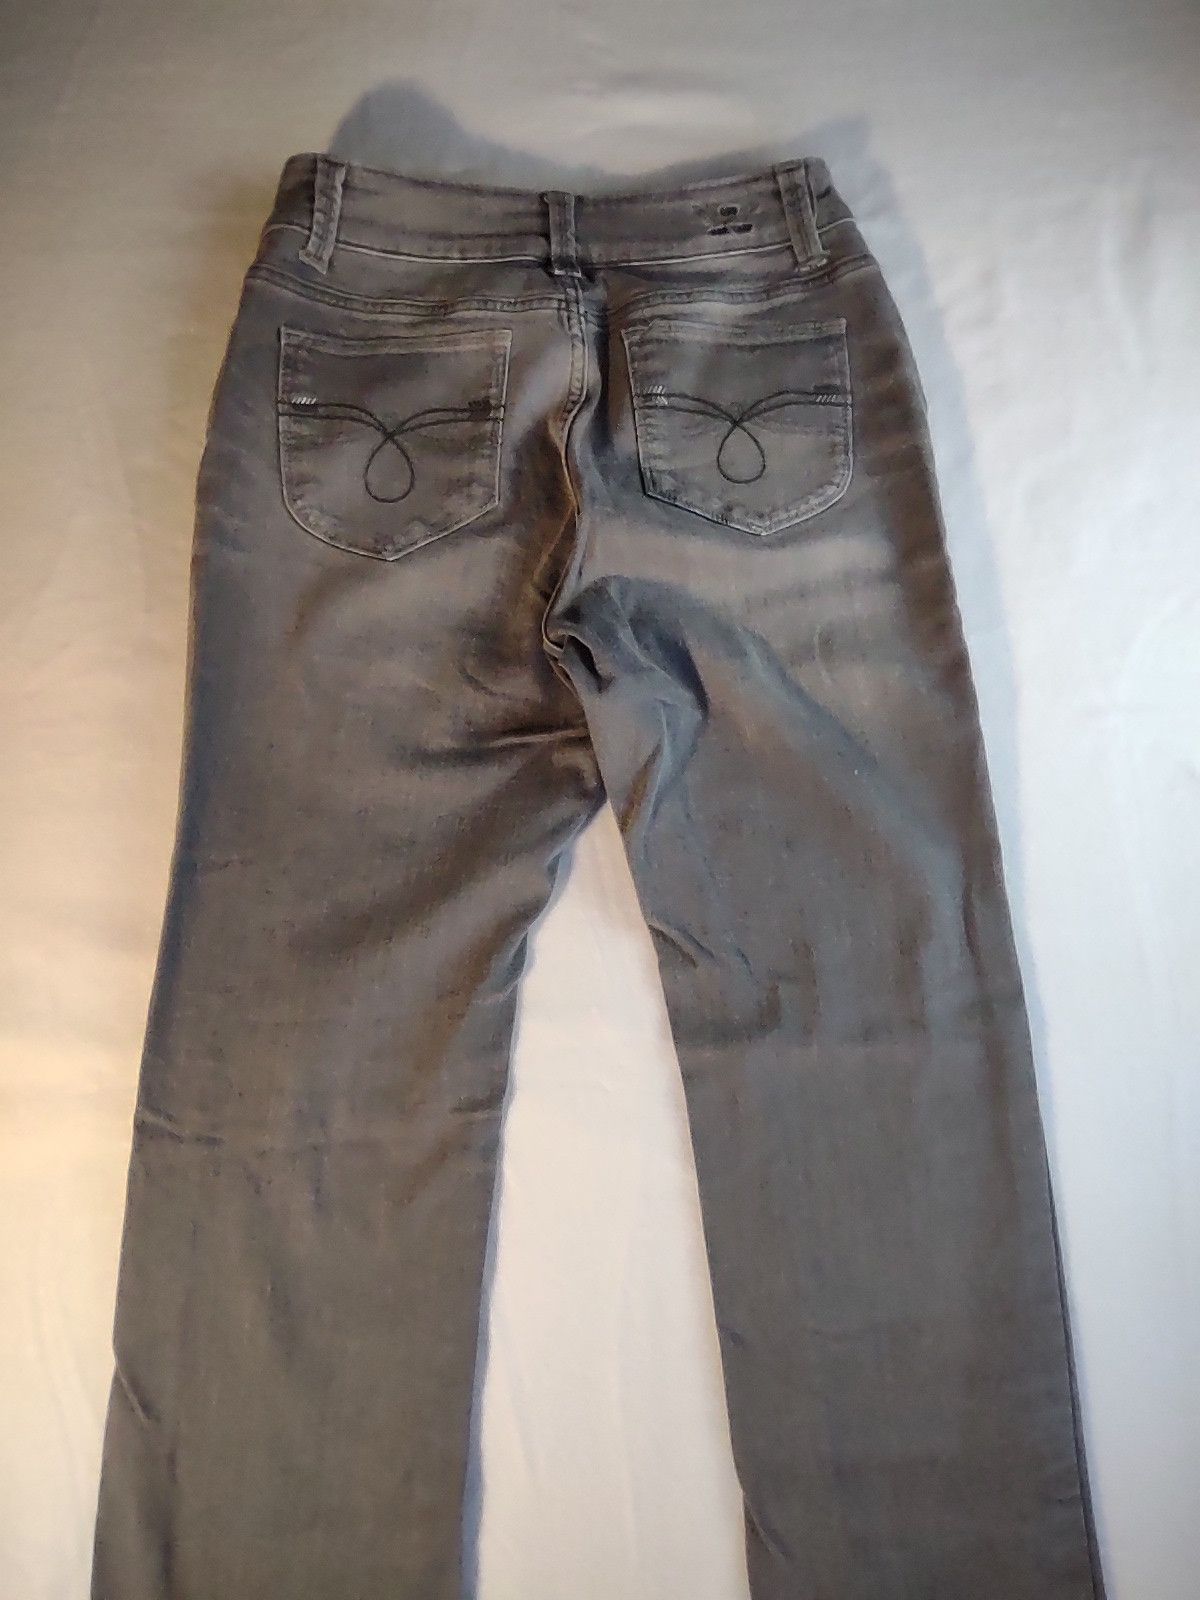 Lee Lee Perfect Fit Just Below Waist denim jeans gray ash wash Size 28" / US 6 / IT 42 - 4 Thumbnail